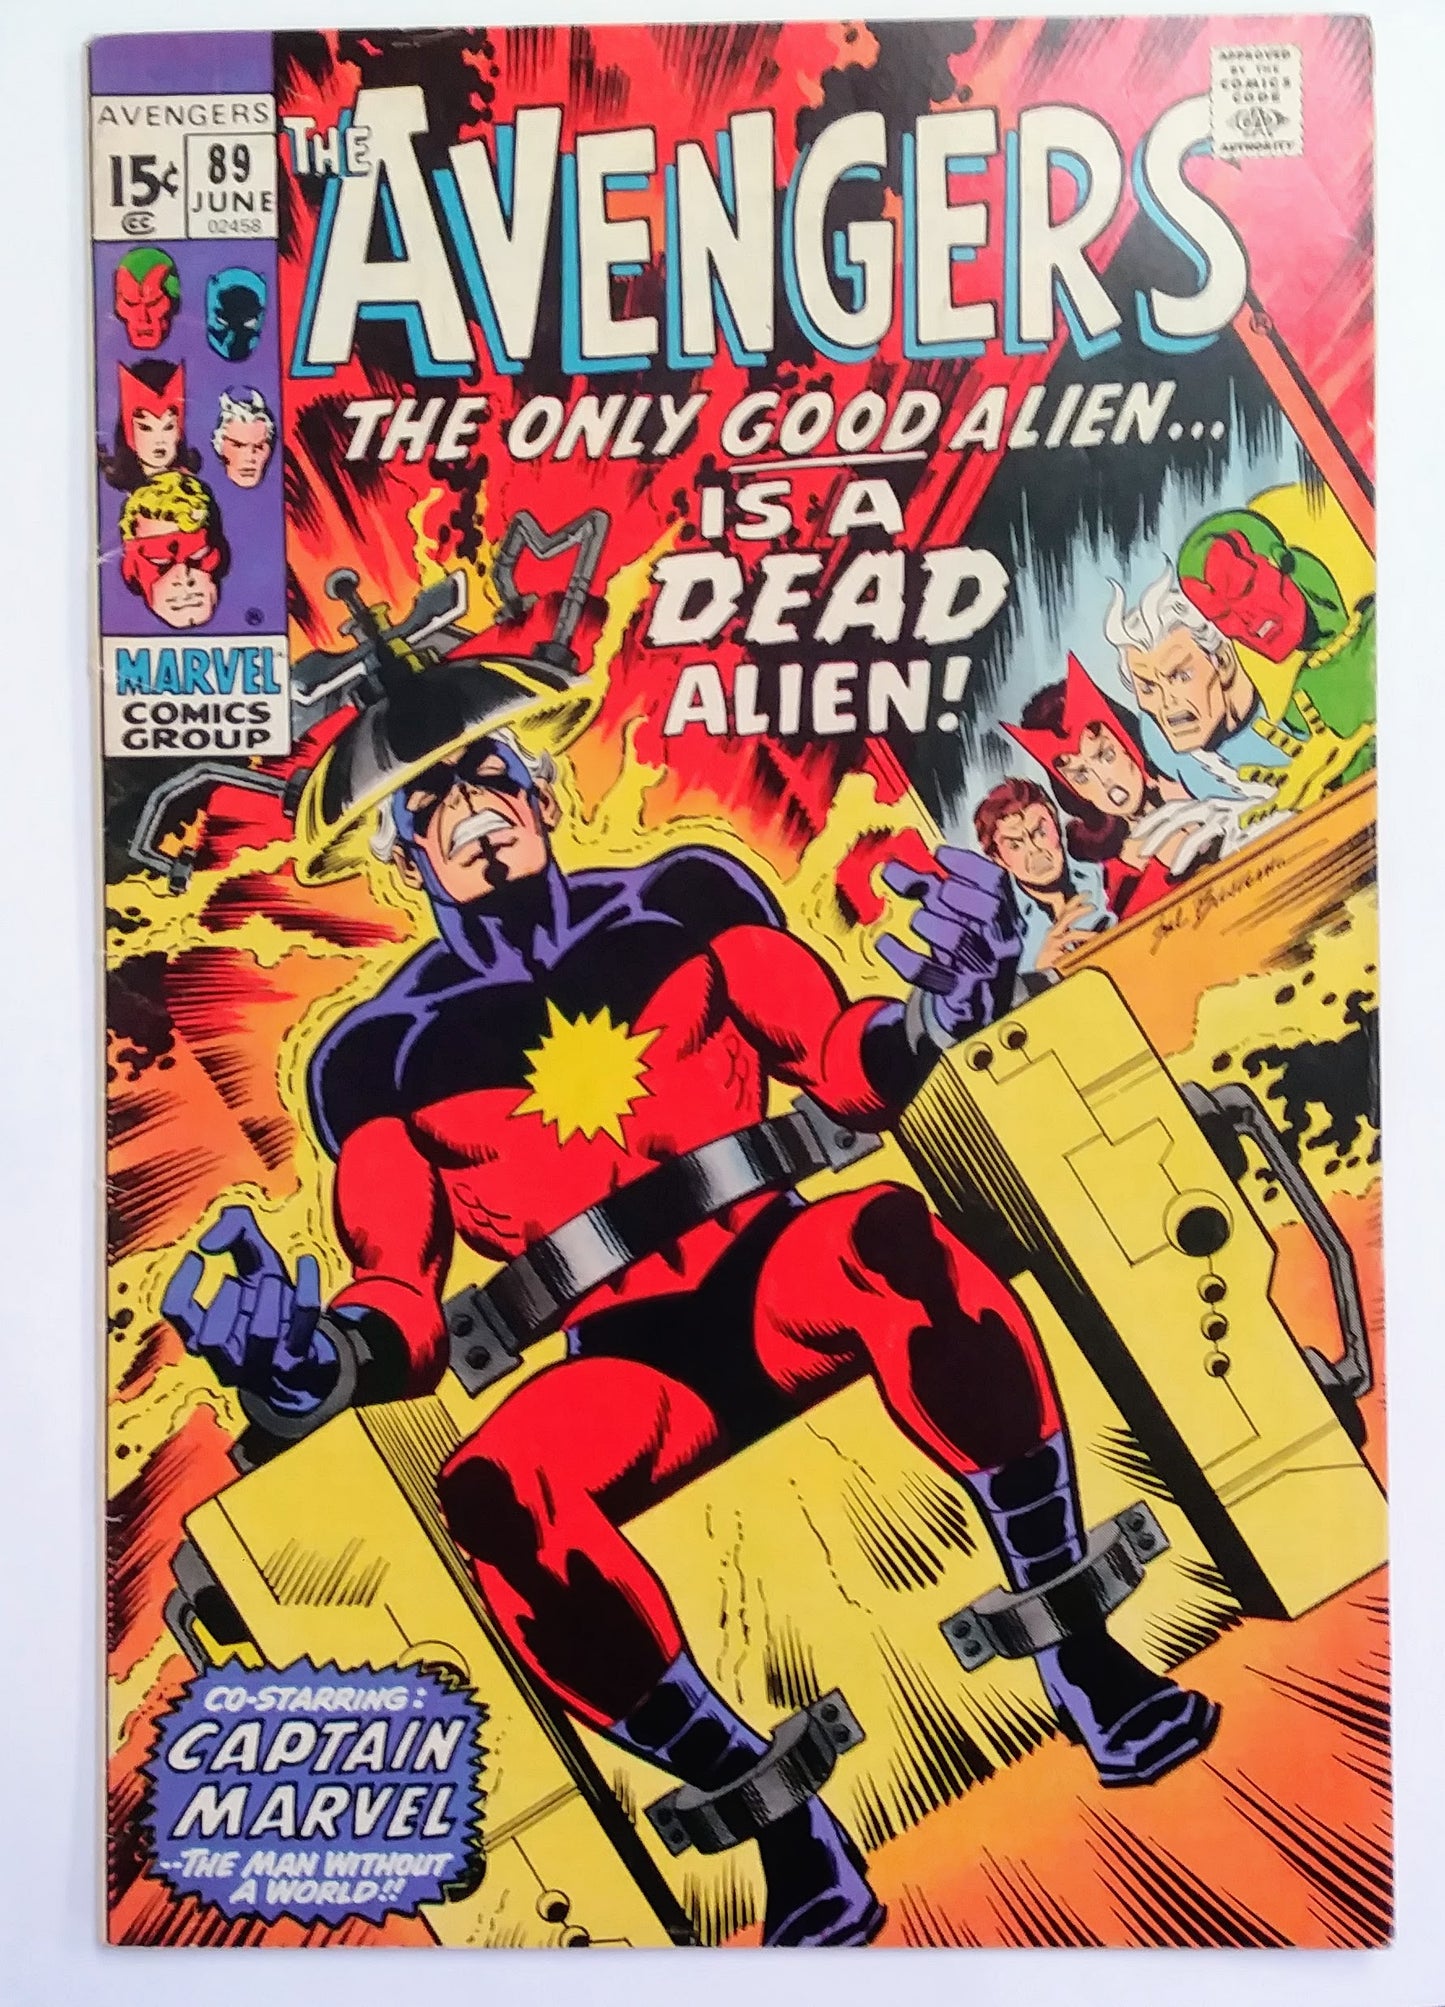 Avengers #089, Marvel Comics (June 1971)